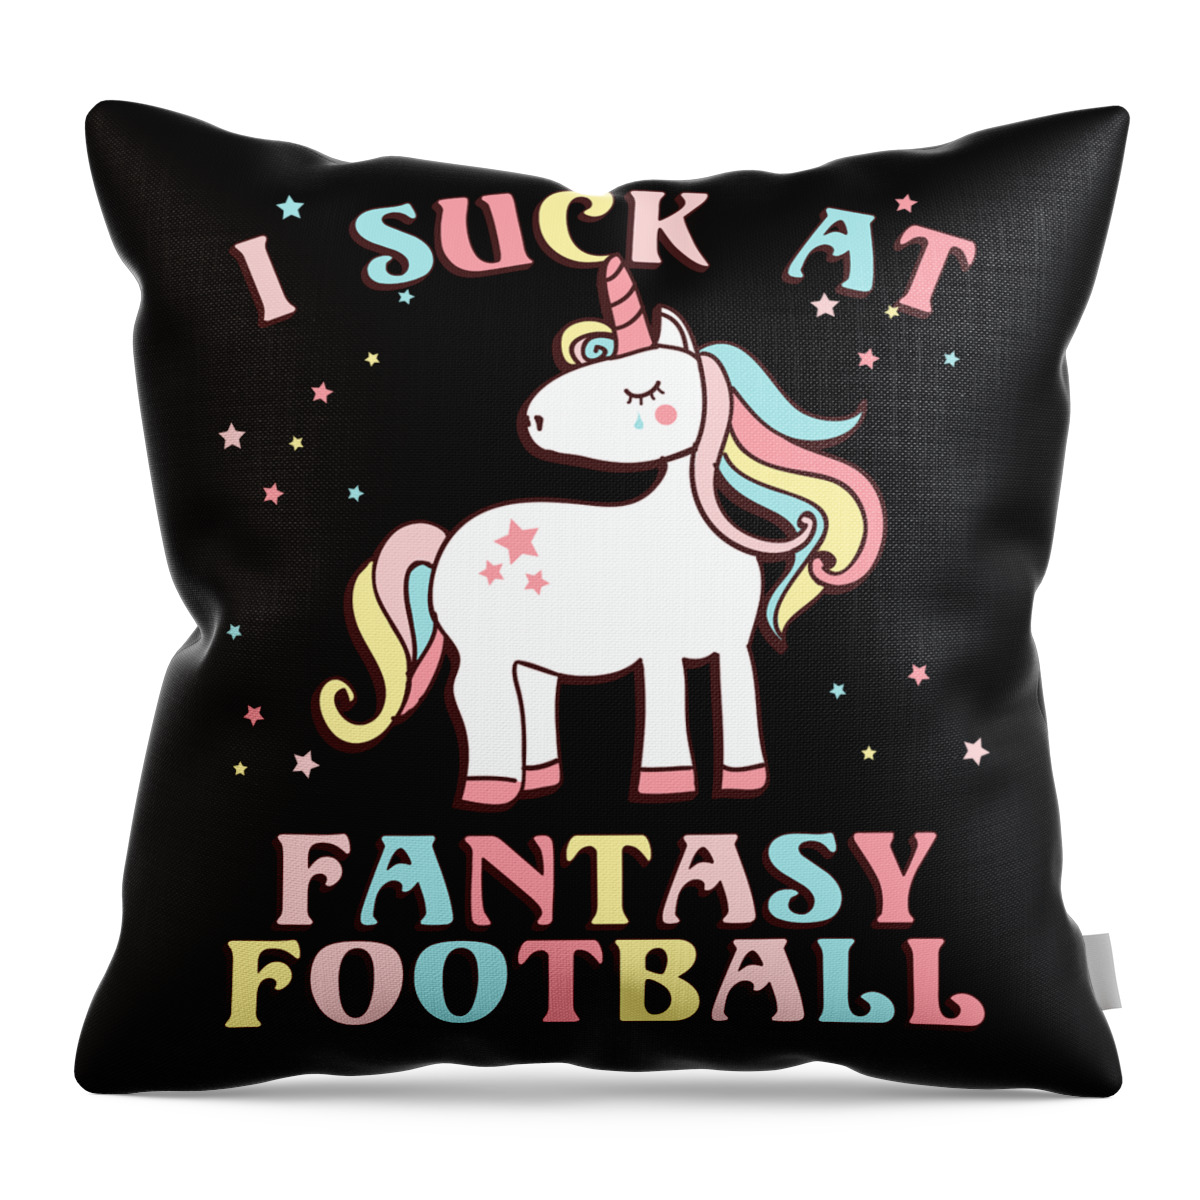 Fantasy Football Throw Pillow featuring the digital art I Suck At Fantasy Football by Flippin Sweet Gear